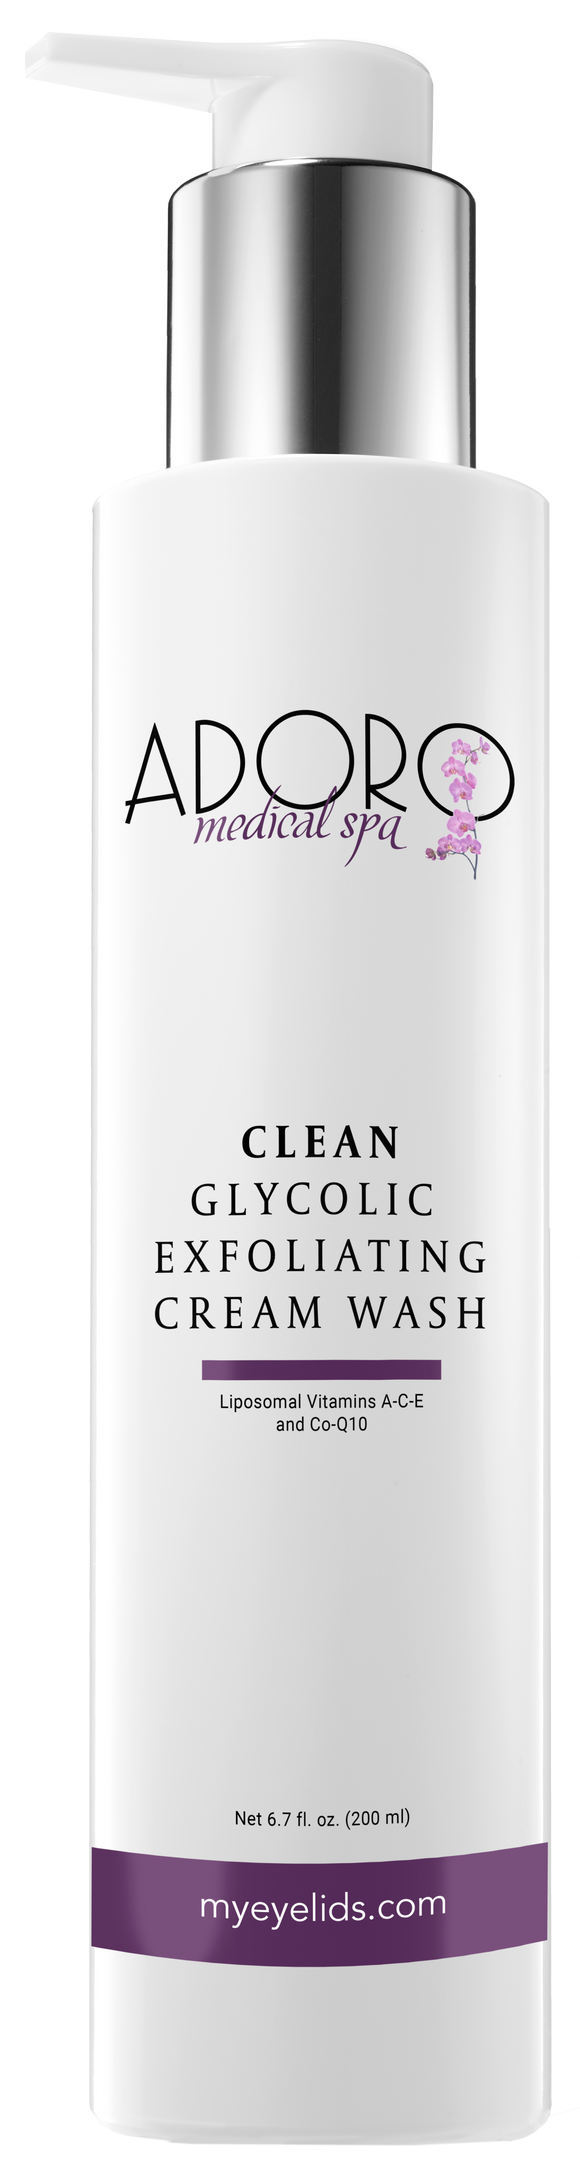 Glycolic Exfoliating Cream Wash